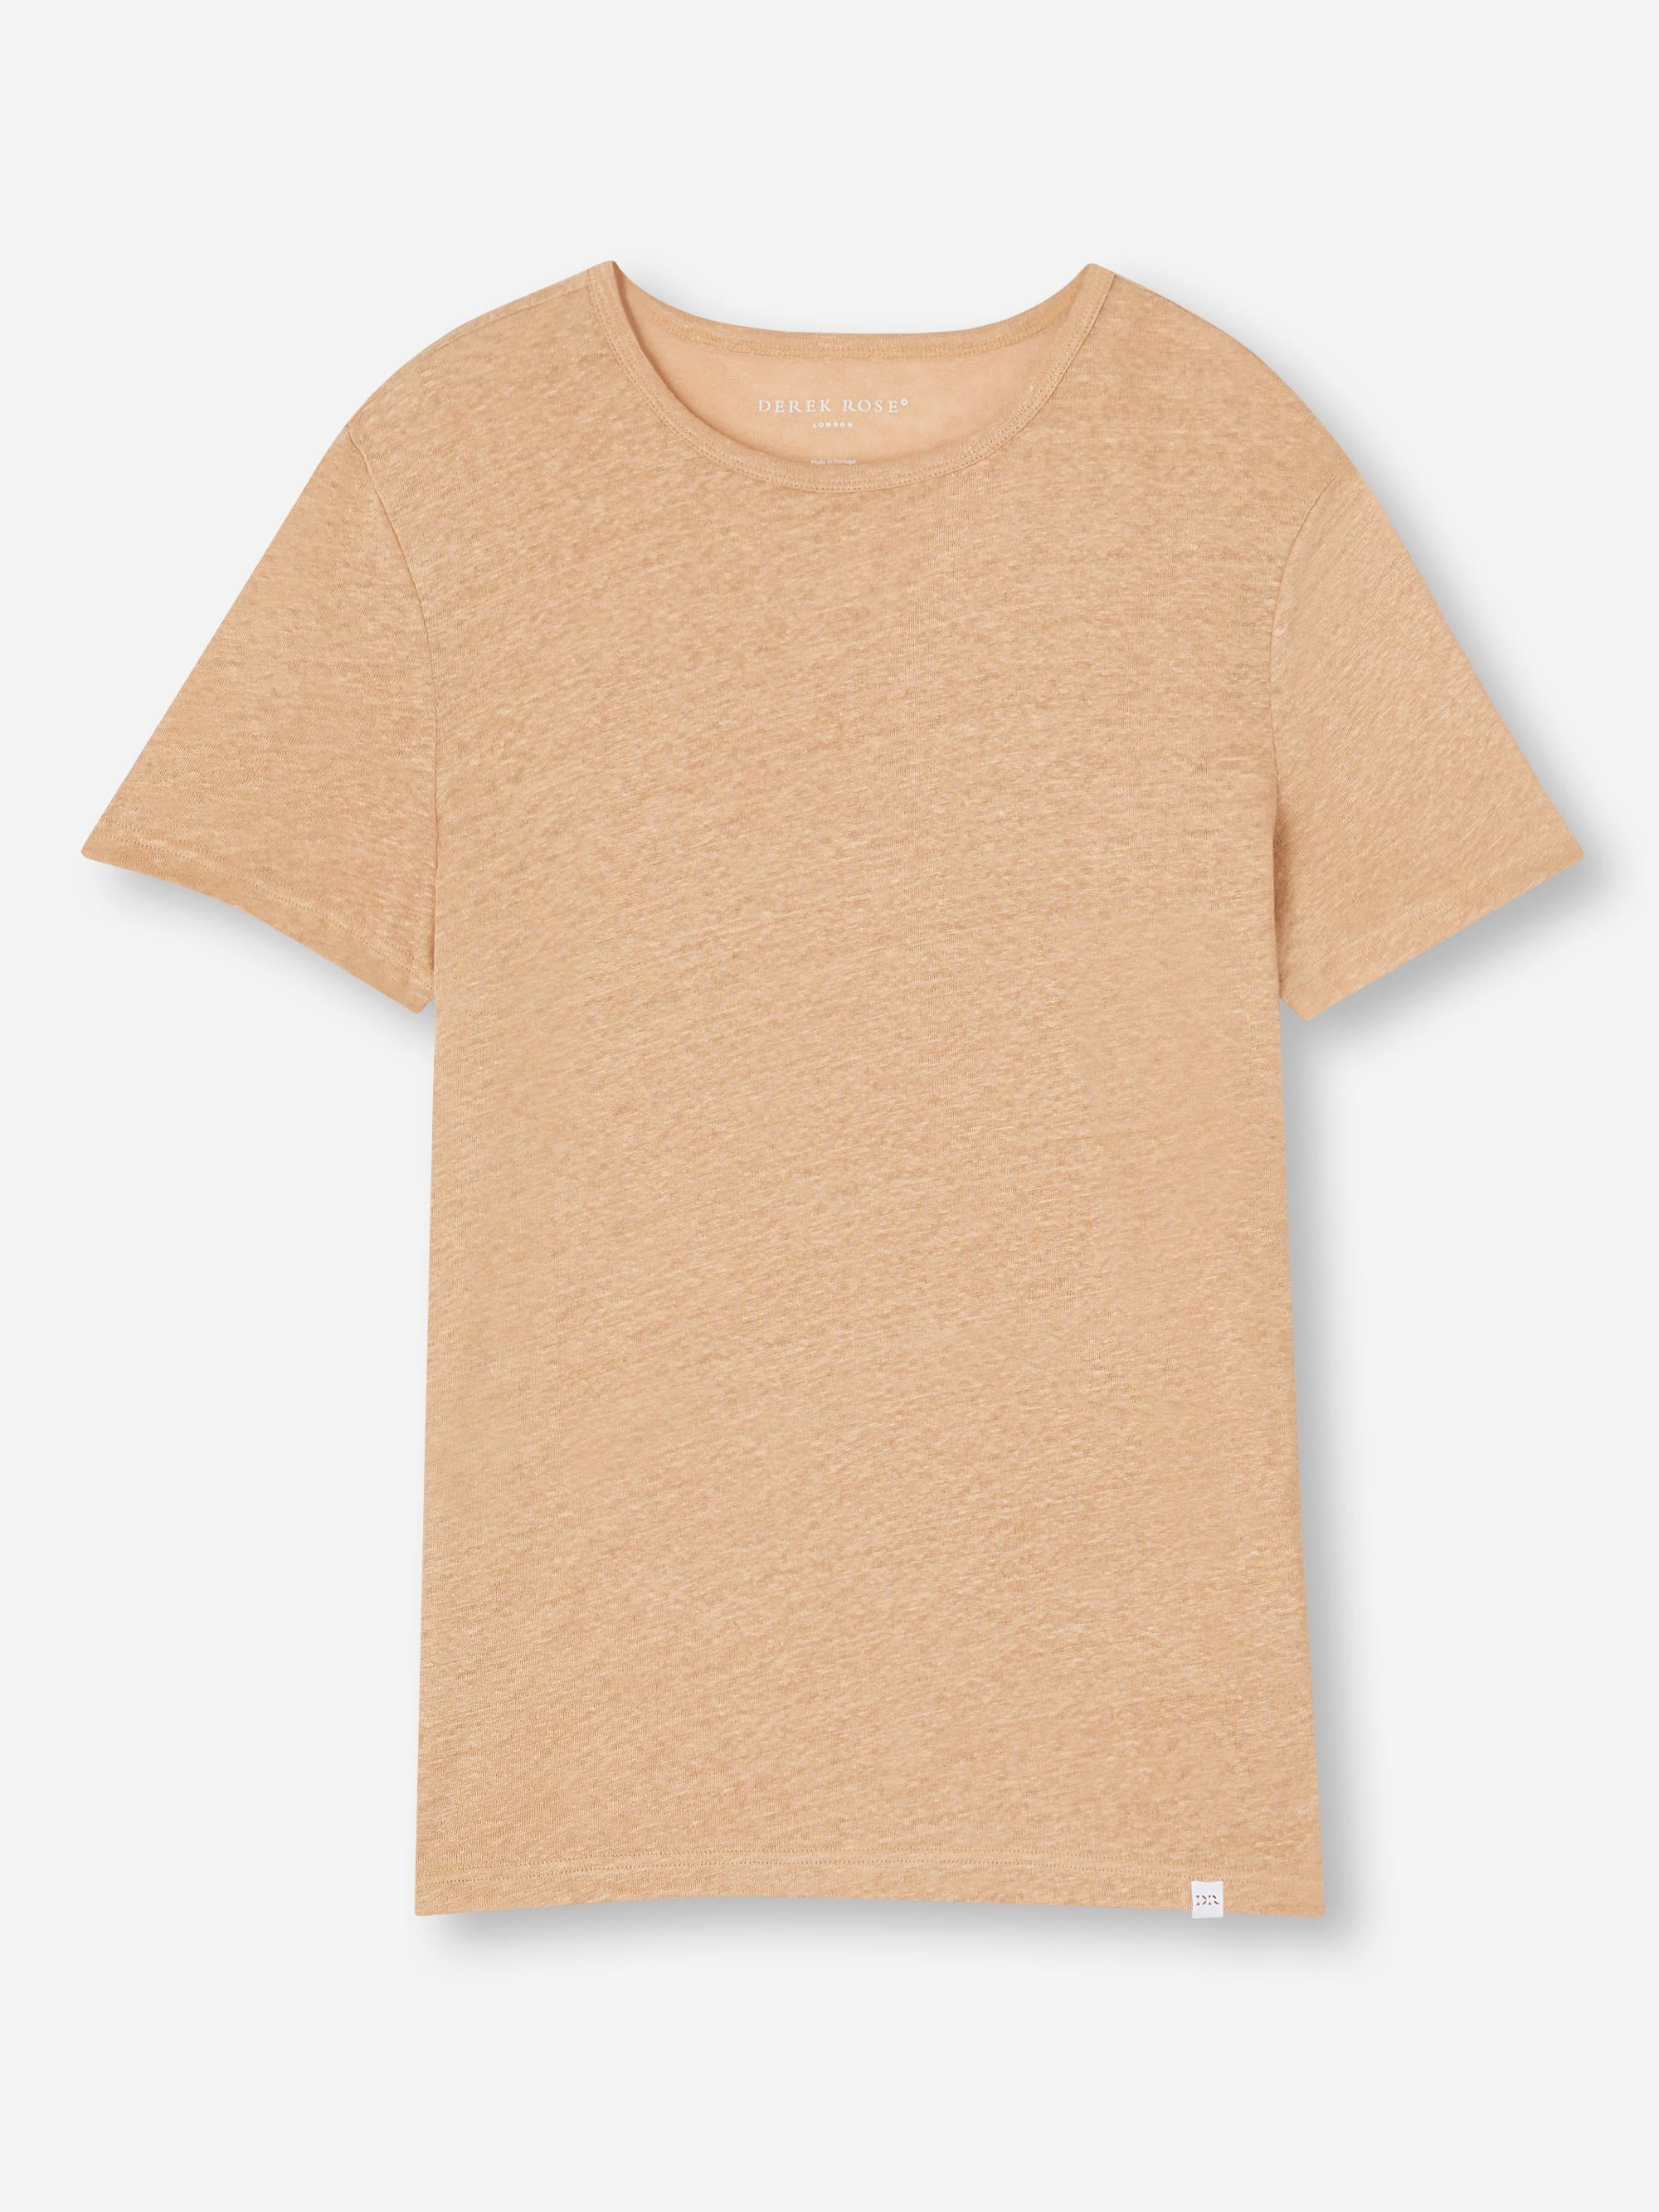 Men's T-Shirt Jordan Linen Sand